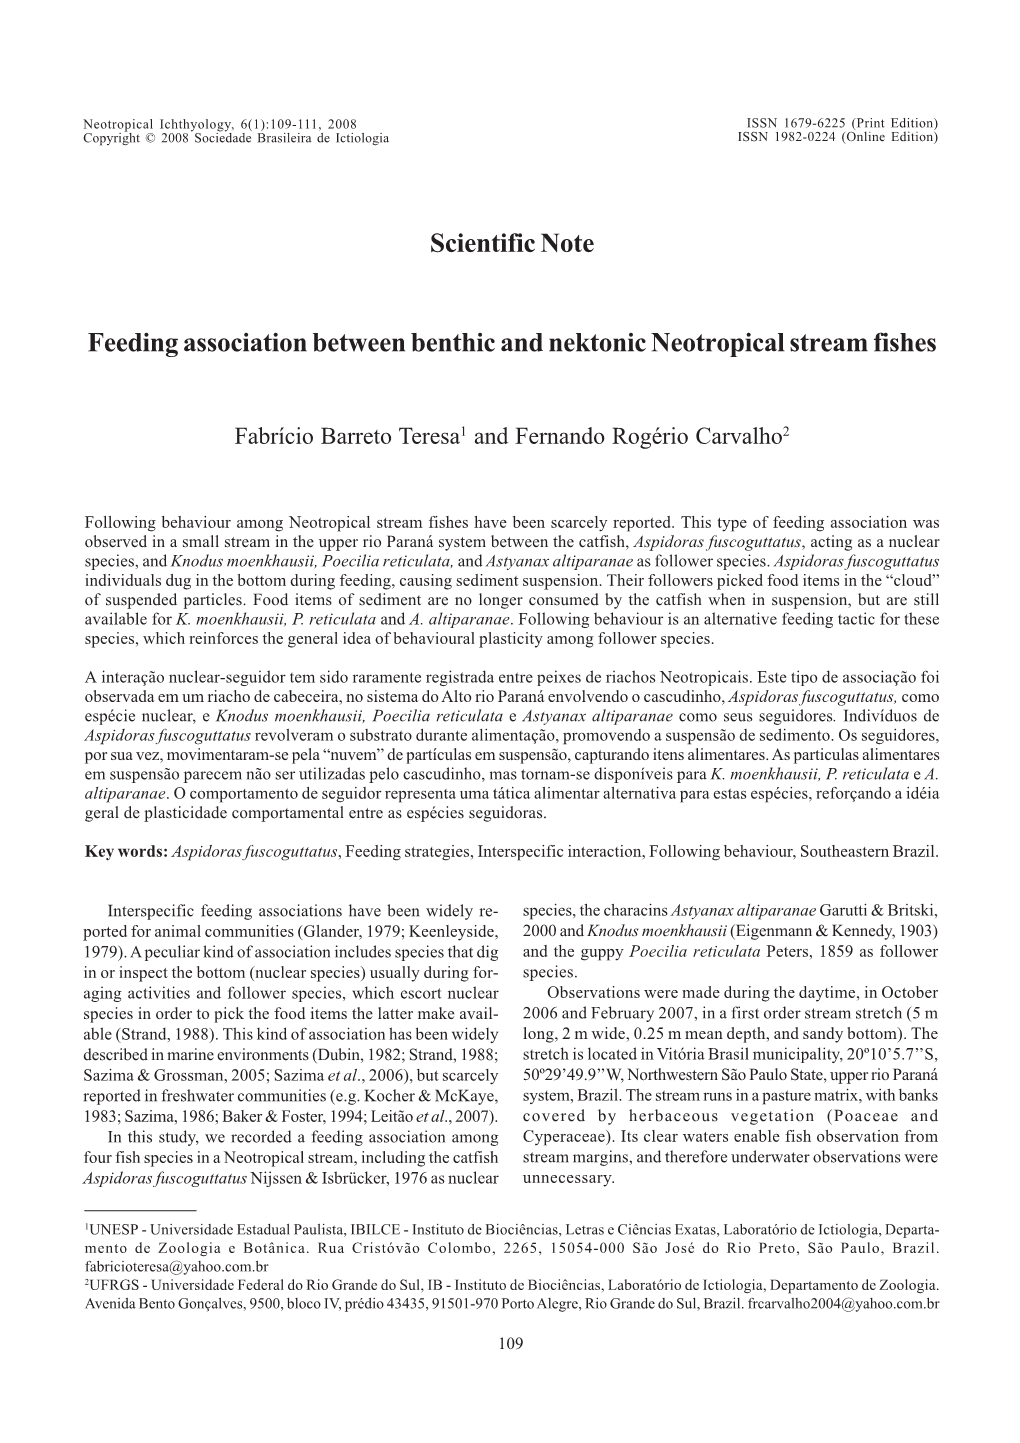 Scientific Note Feeding Association Between Benthic and Nektonic